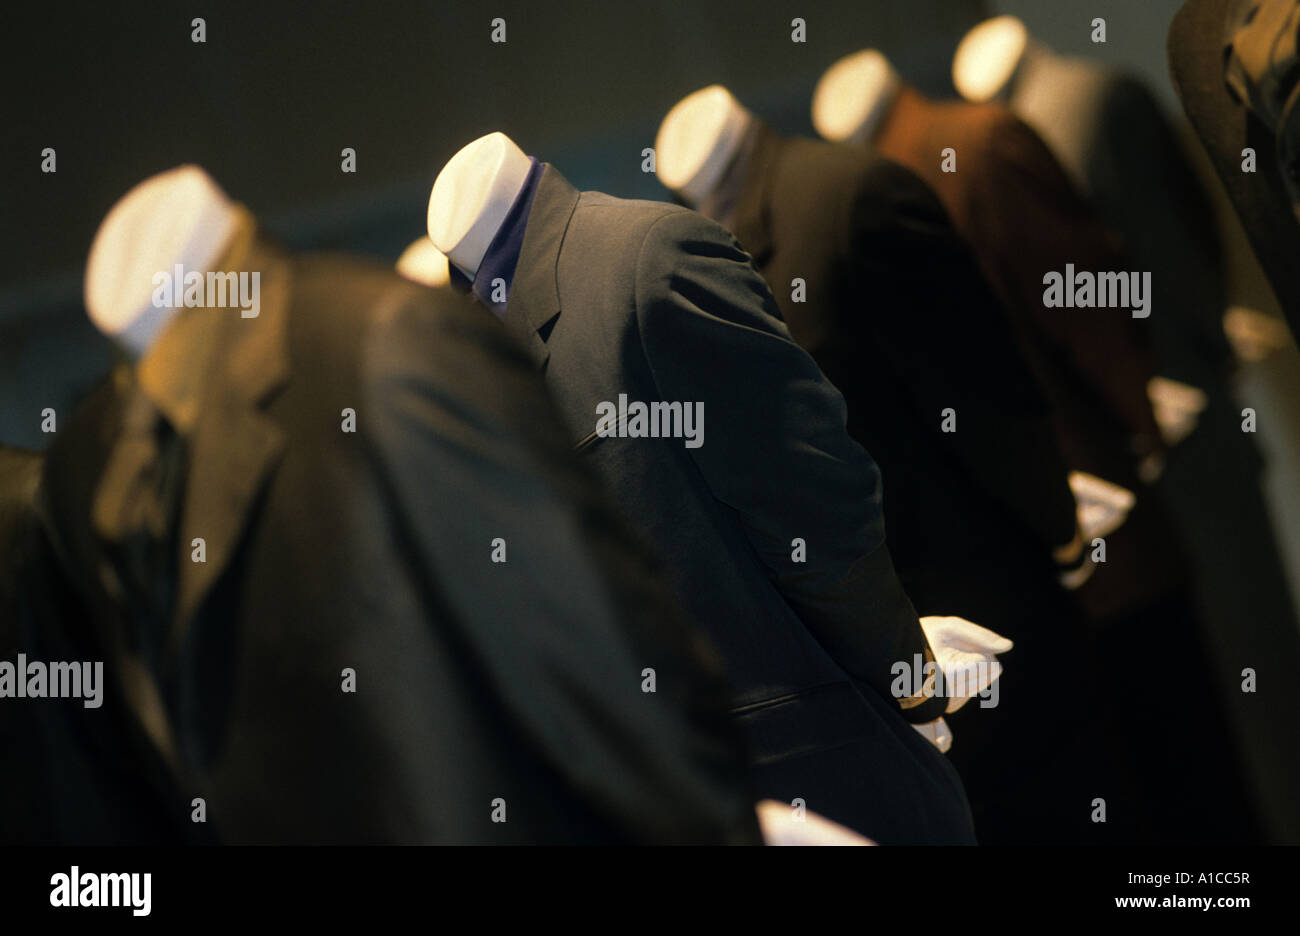 anonymous models headless men fashion suit similarity Stock Photo